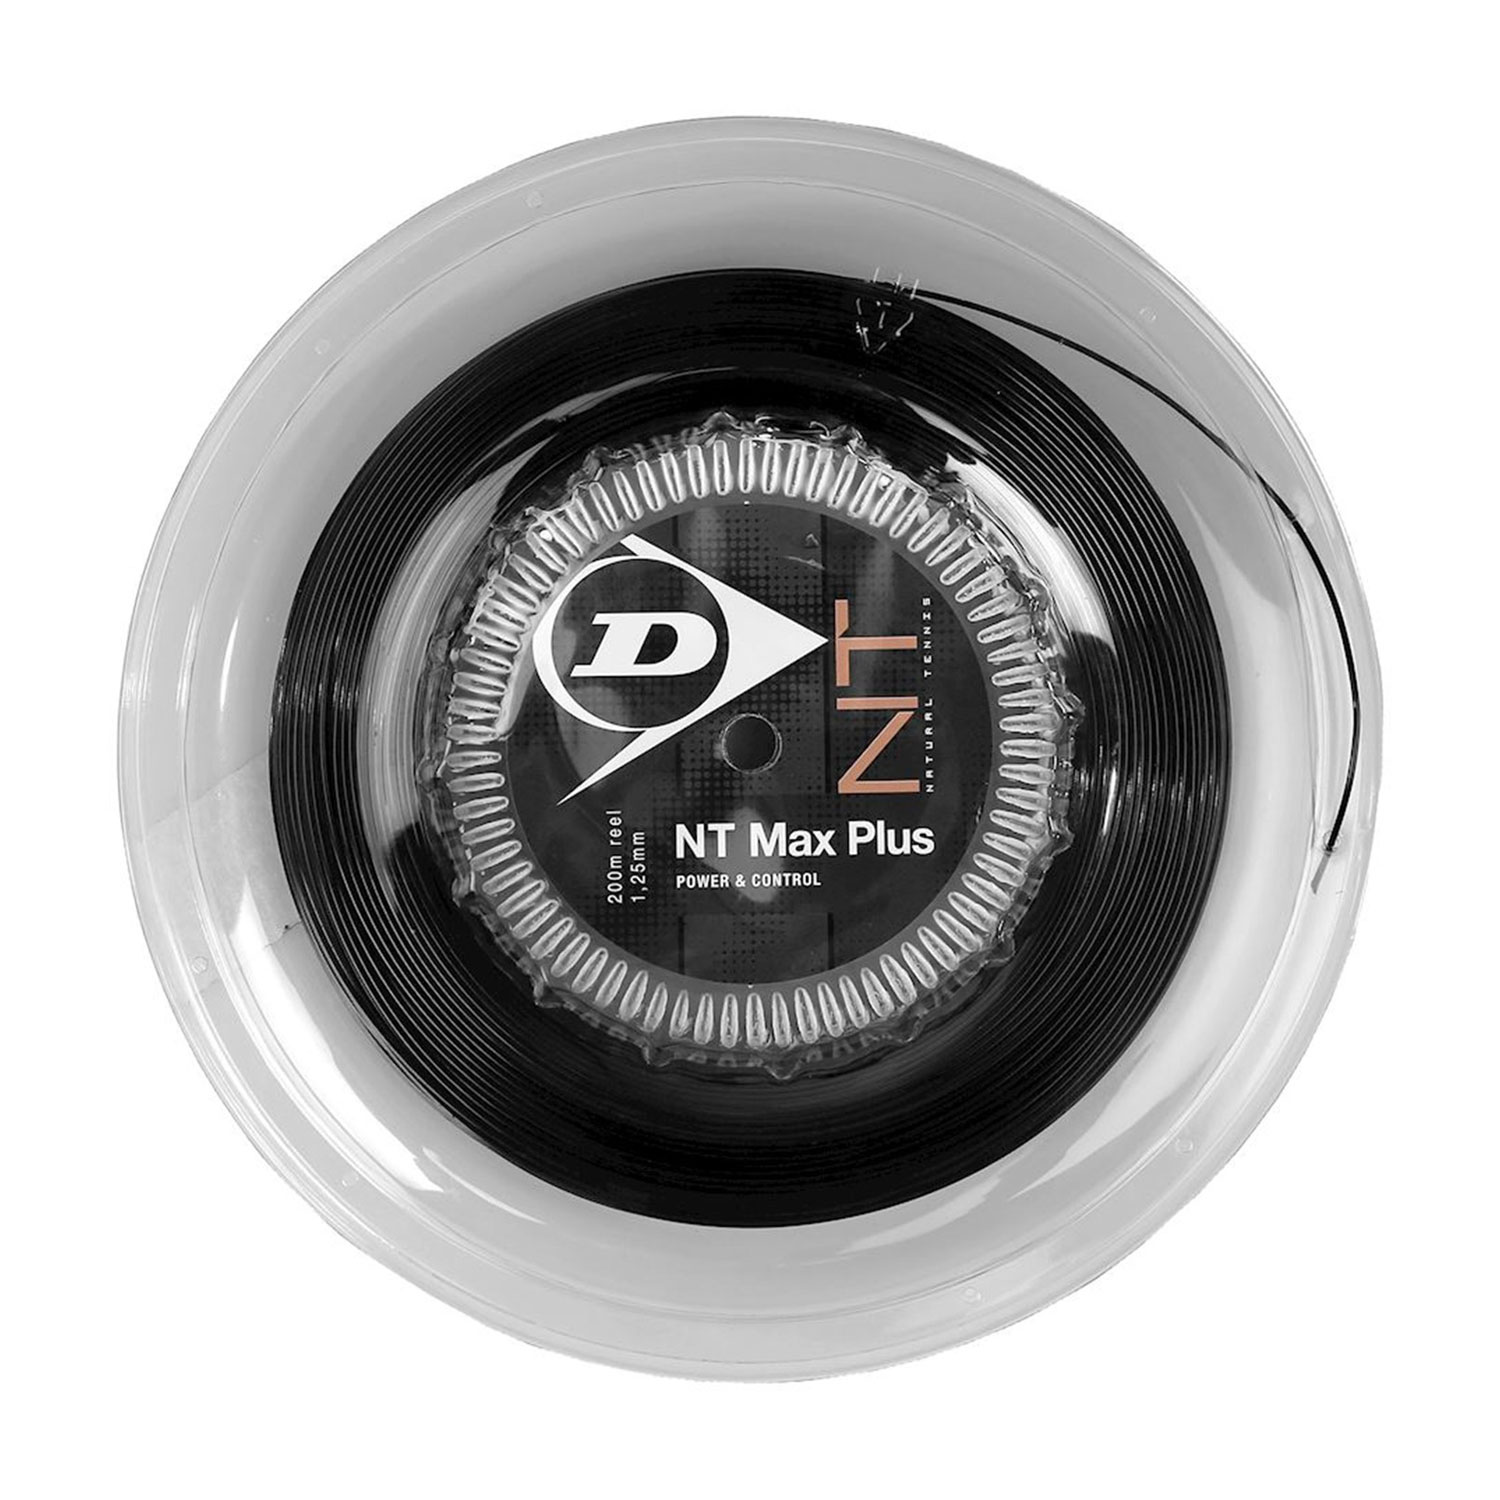 Dunlop NT Max Plus 1.25 Matassa 200 m - Black